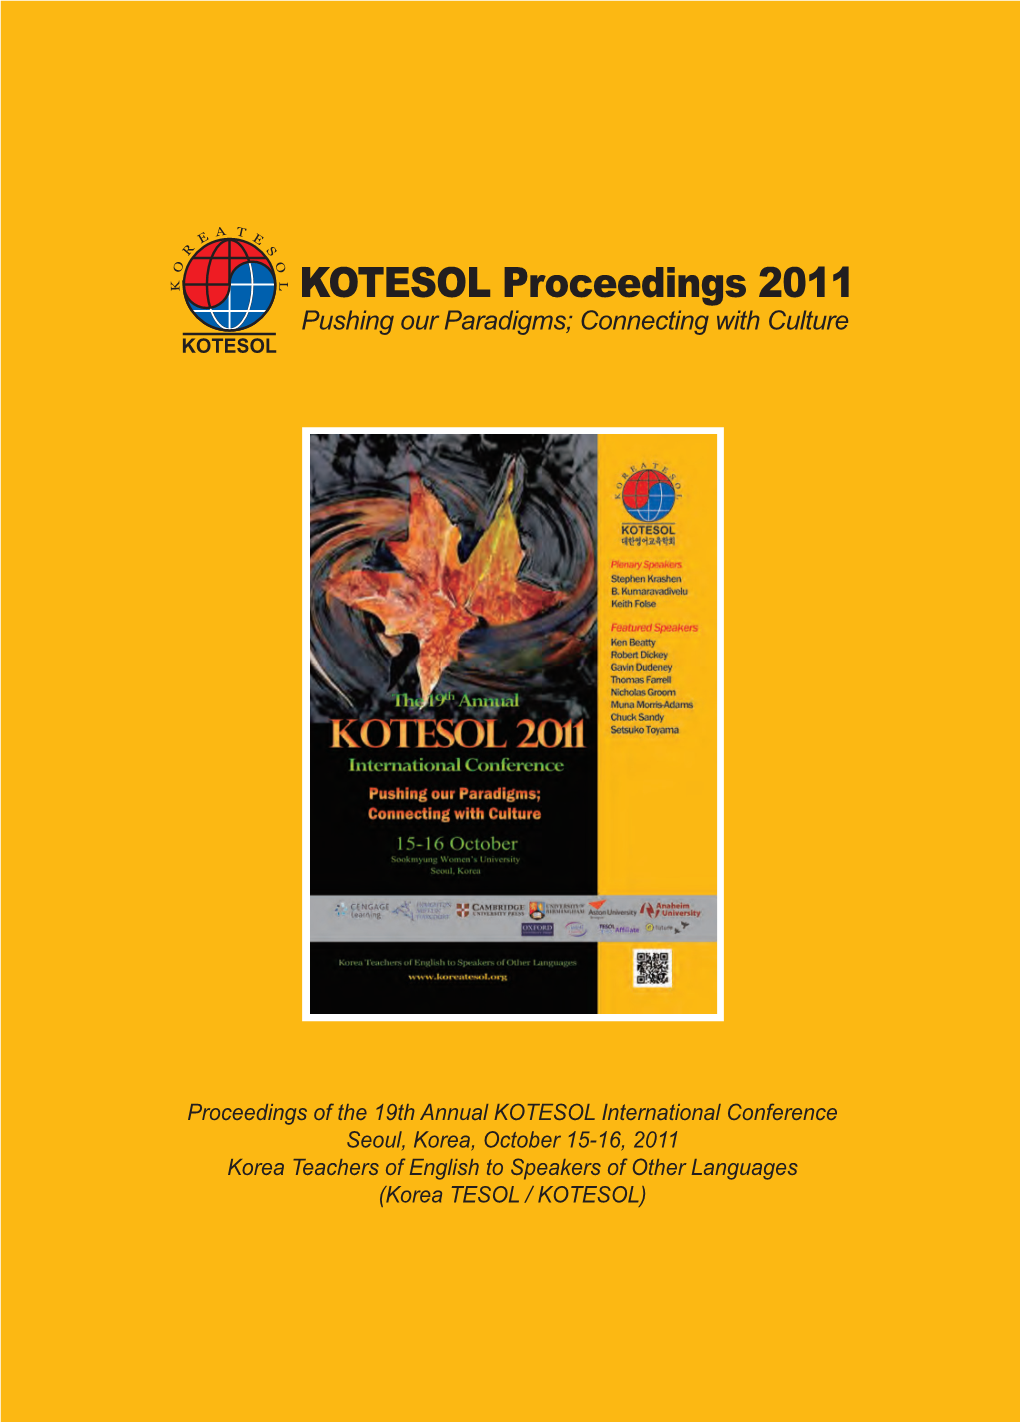 The 19Th Annual KOTESOL International Conference Seoul, Korea, October 15-16, 2011